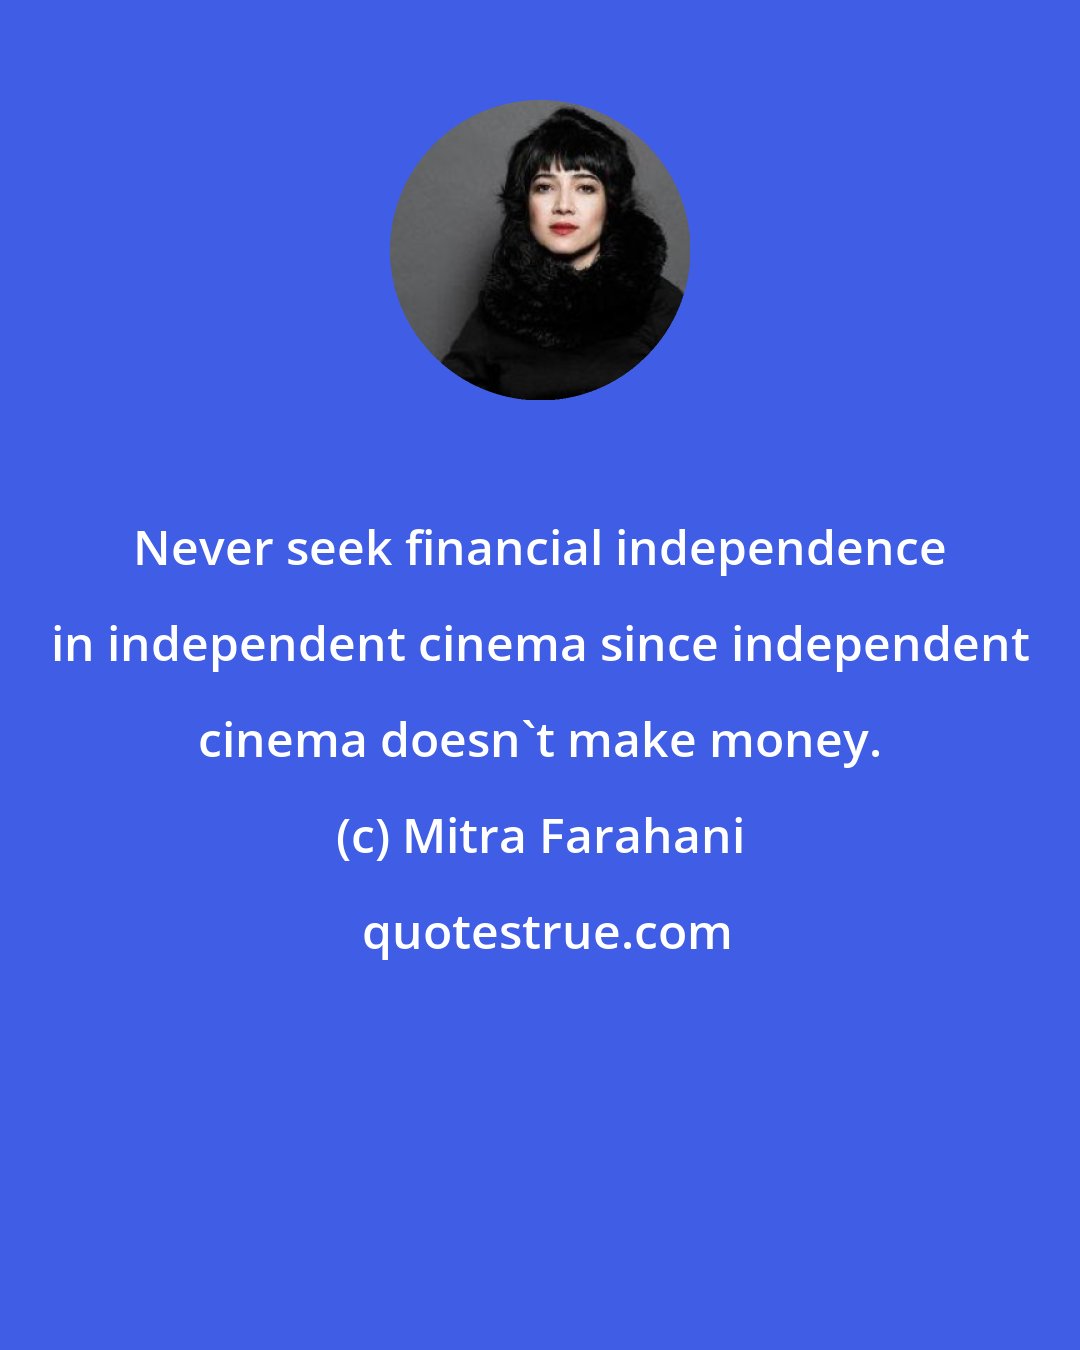 Mitra Farahani: Never seek financial independence in independent cinema since independent cinema doesn't make money.